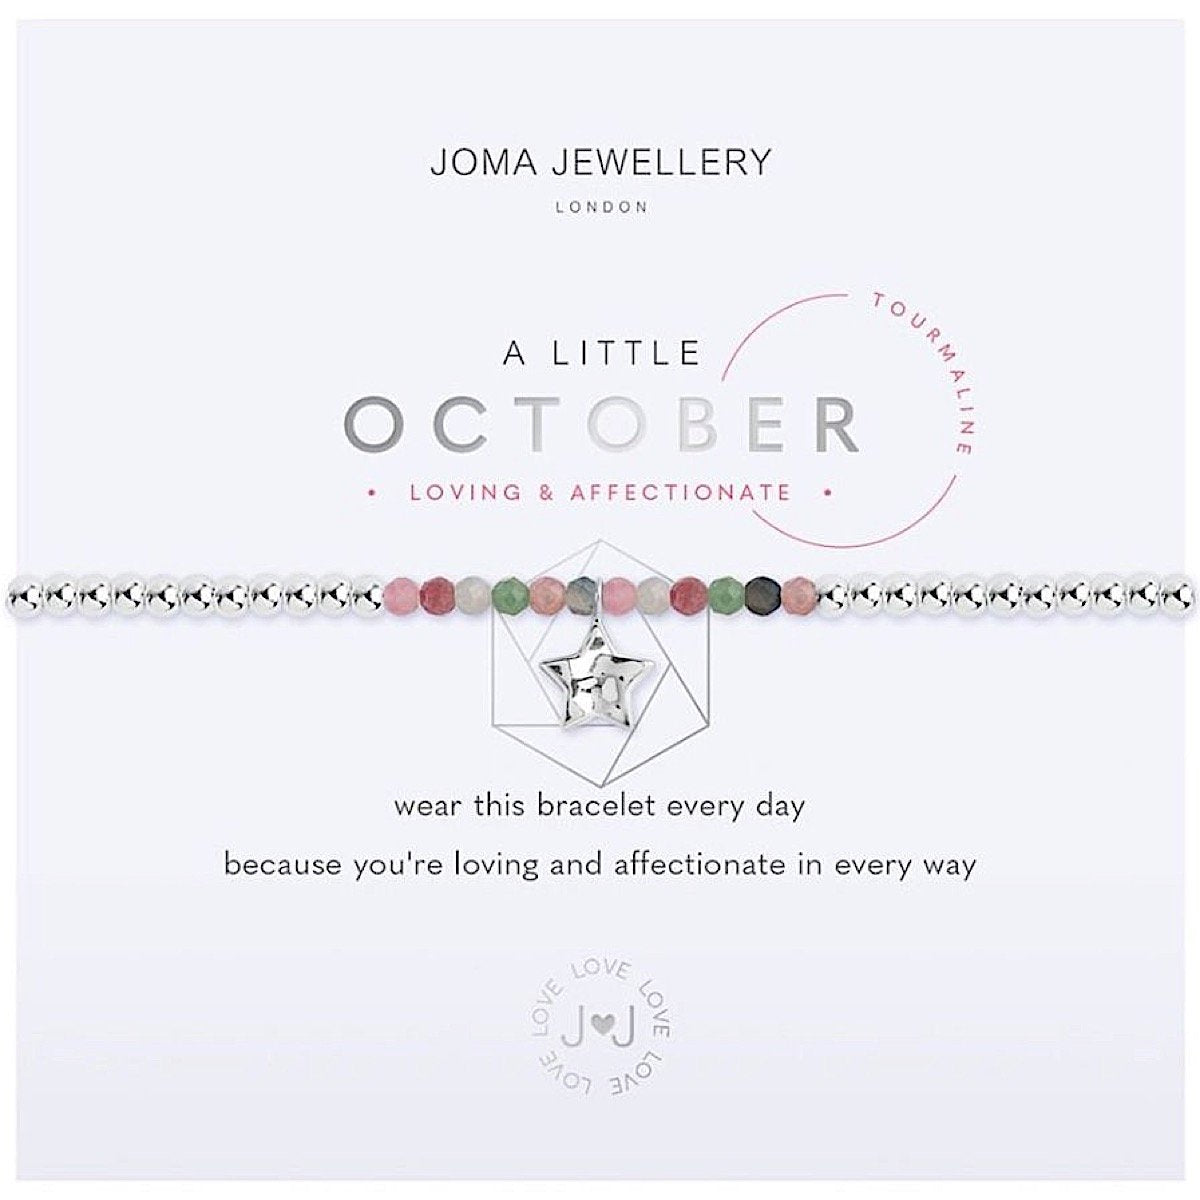 Joma Jewellery - October Birthstone - Tourmaline - Loving & Affectionate